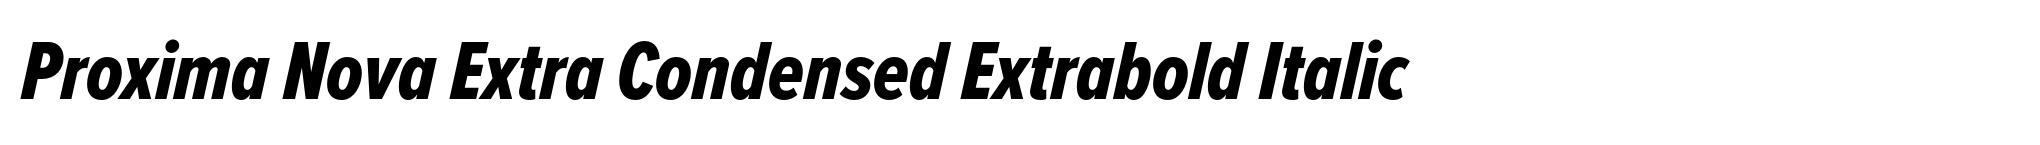 Proxima Nova Extra Condensed Extrabold Italic image